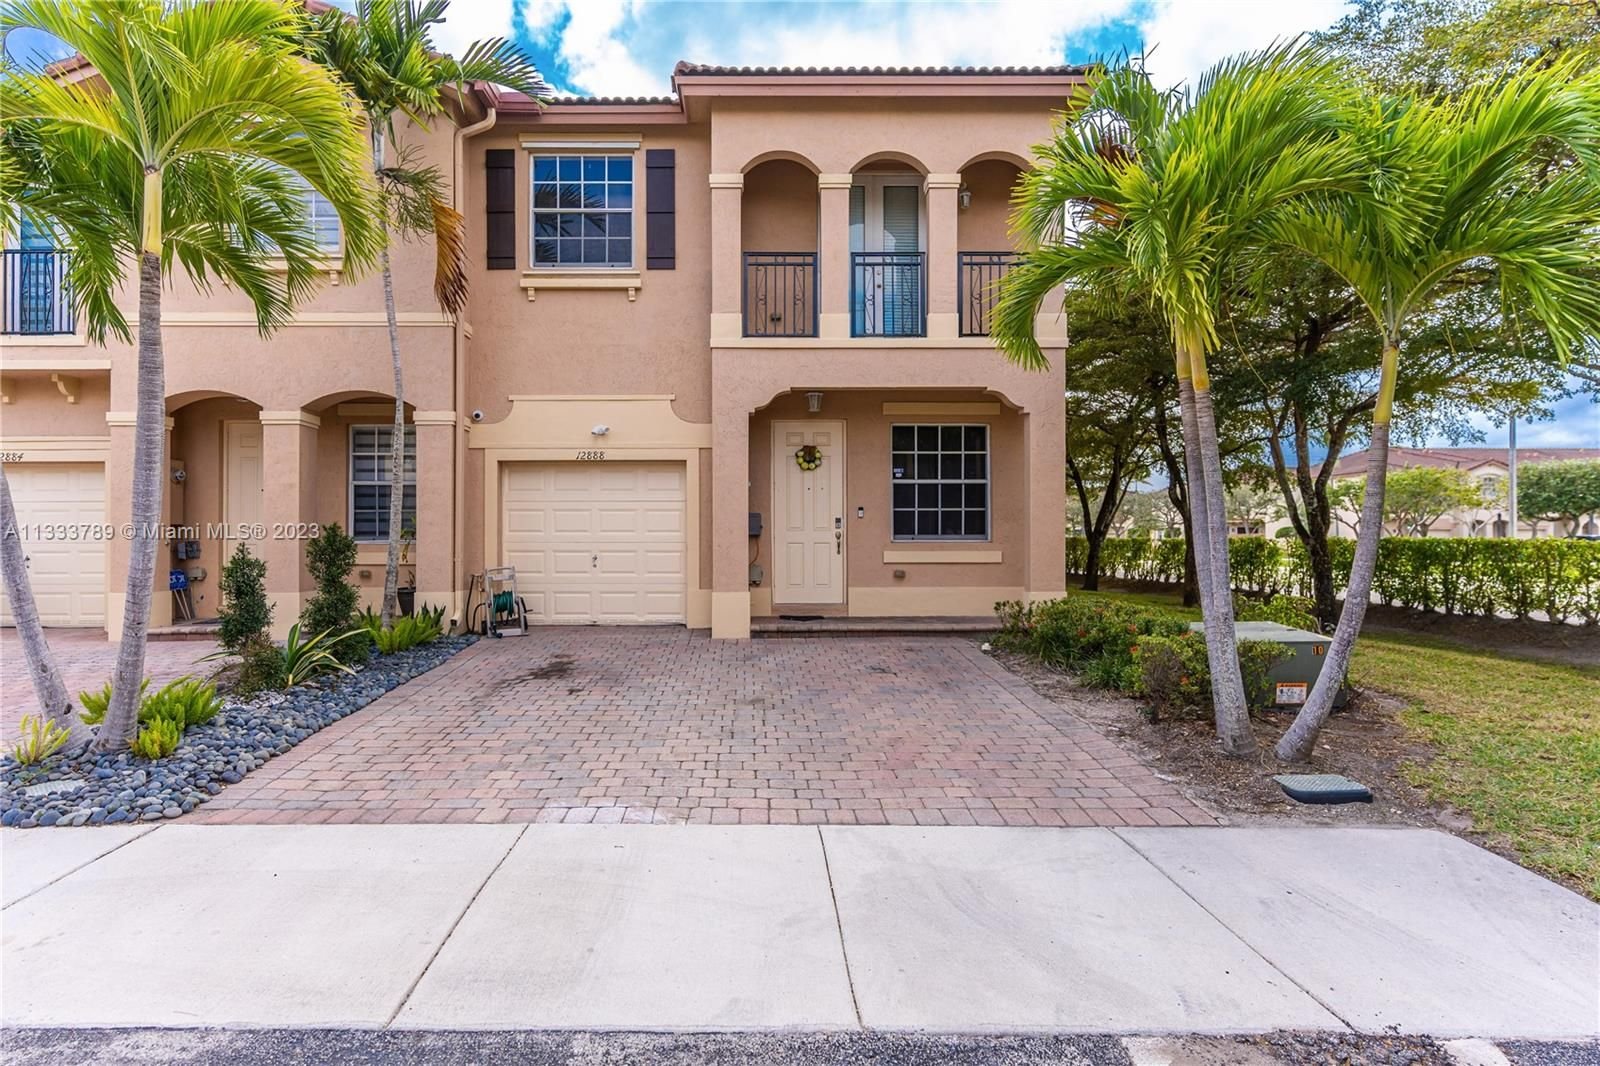 Real estate property located at 12888 134th Ter, Miami-Dade County, Miami, FL